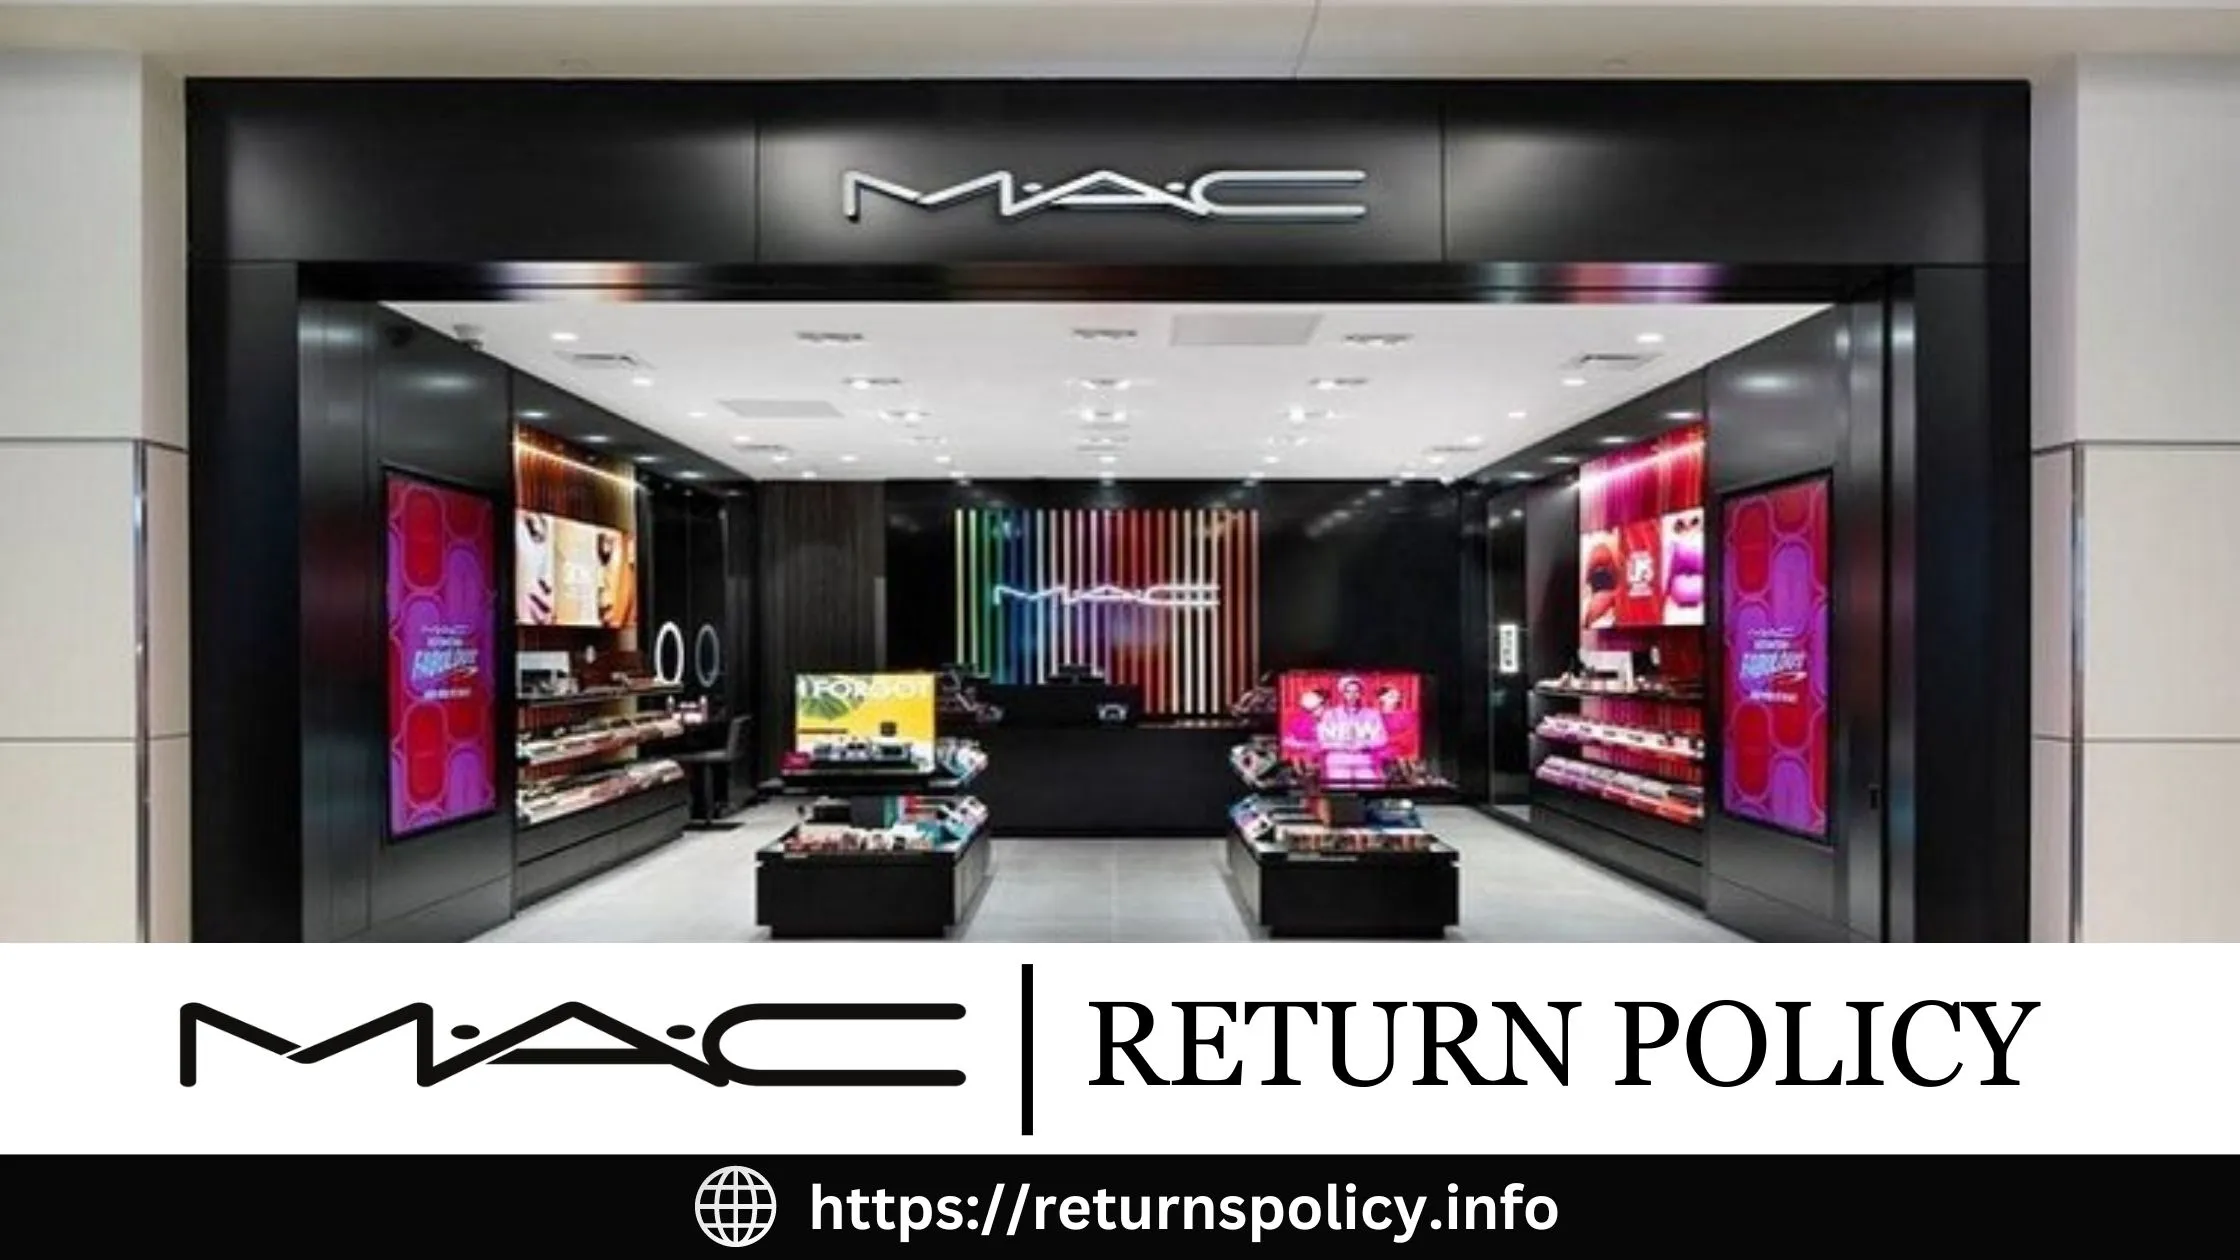 MAC Cosmetics Return Policy